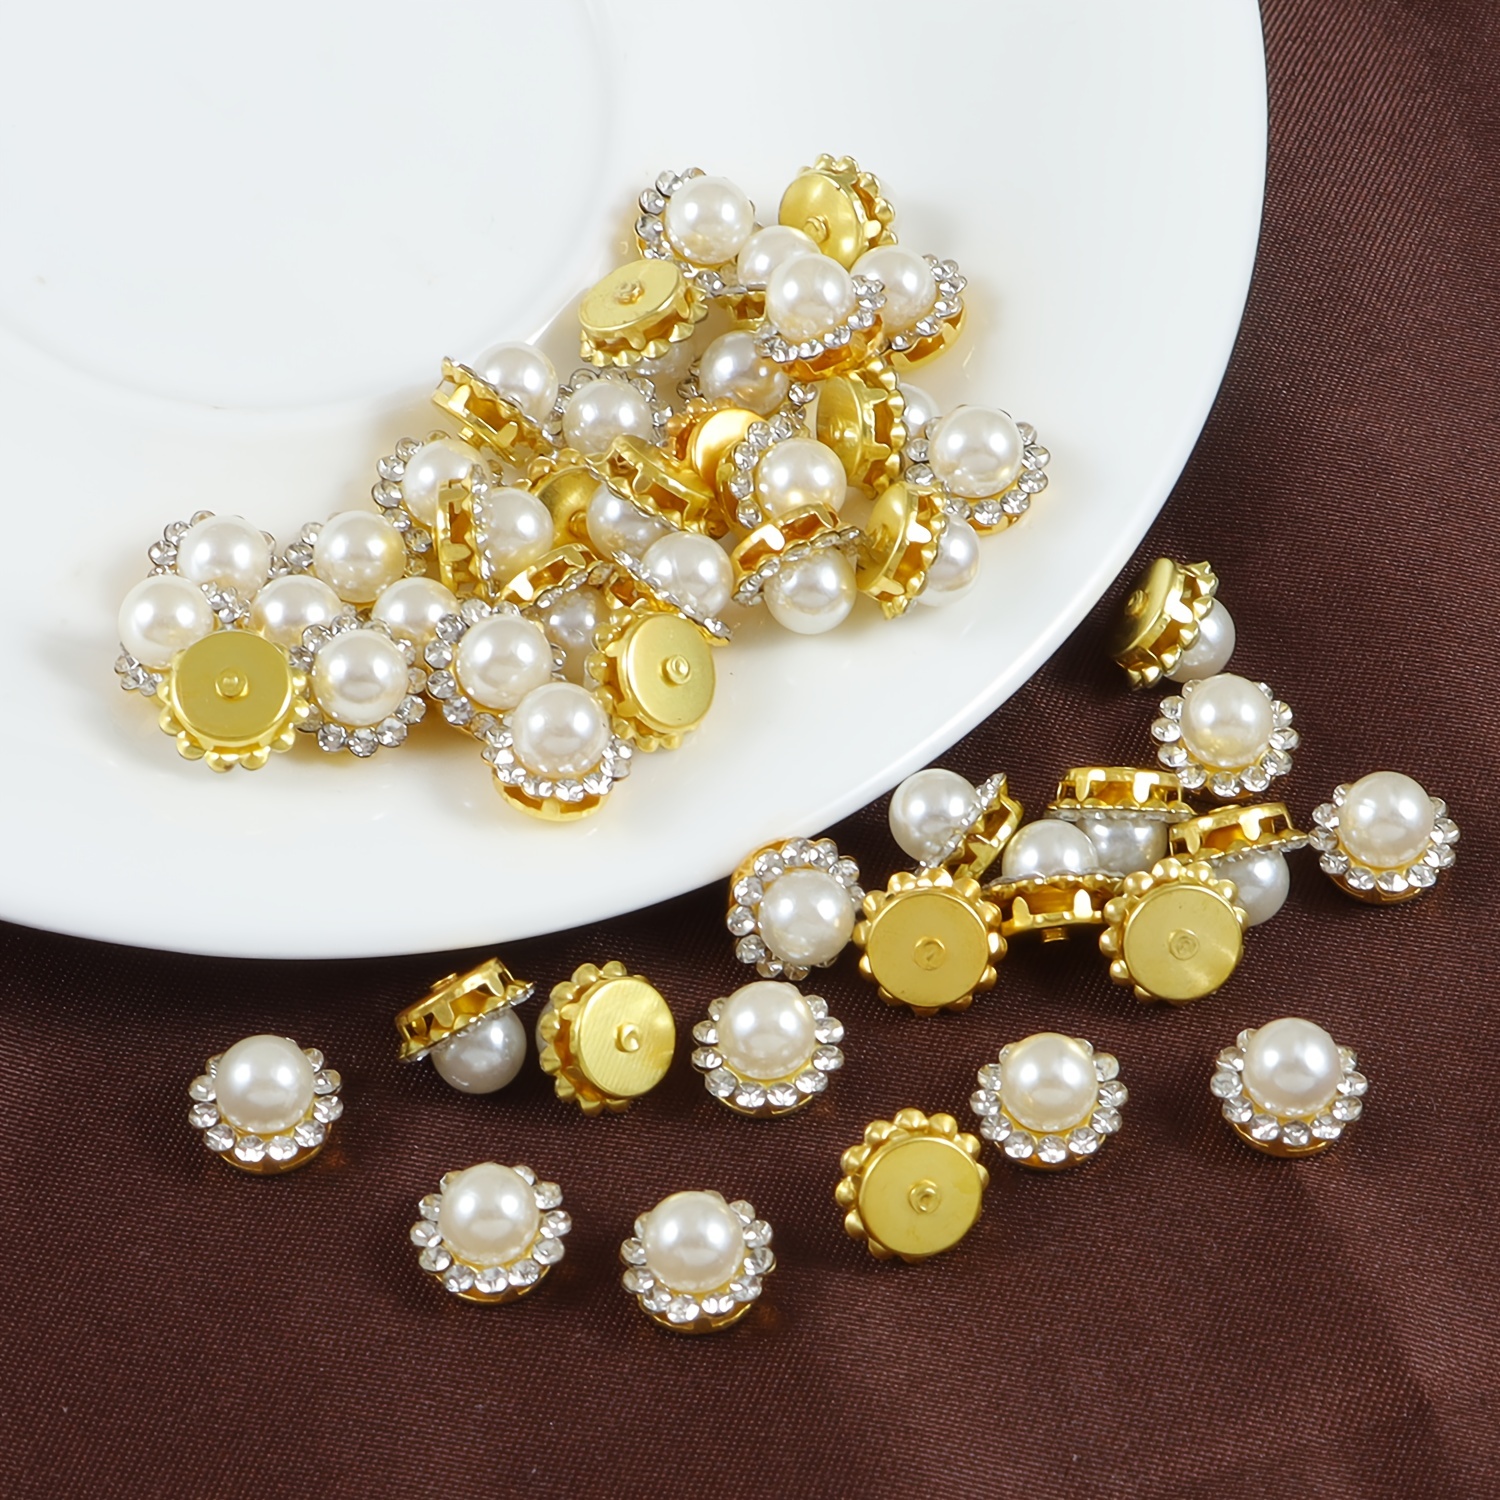 200 Pieces Pearl Flatback Rhinestones,12mm Flower Claw Cup Rhinestones for  Crafting Faux Shiny Diamond Rhinestone for Jewelry Making Hairwear